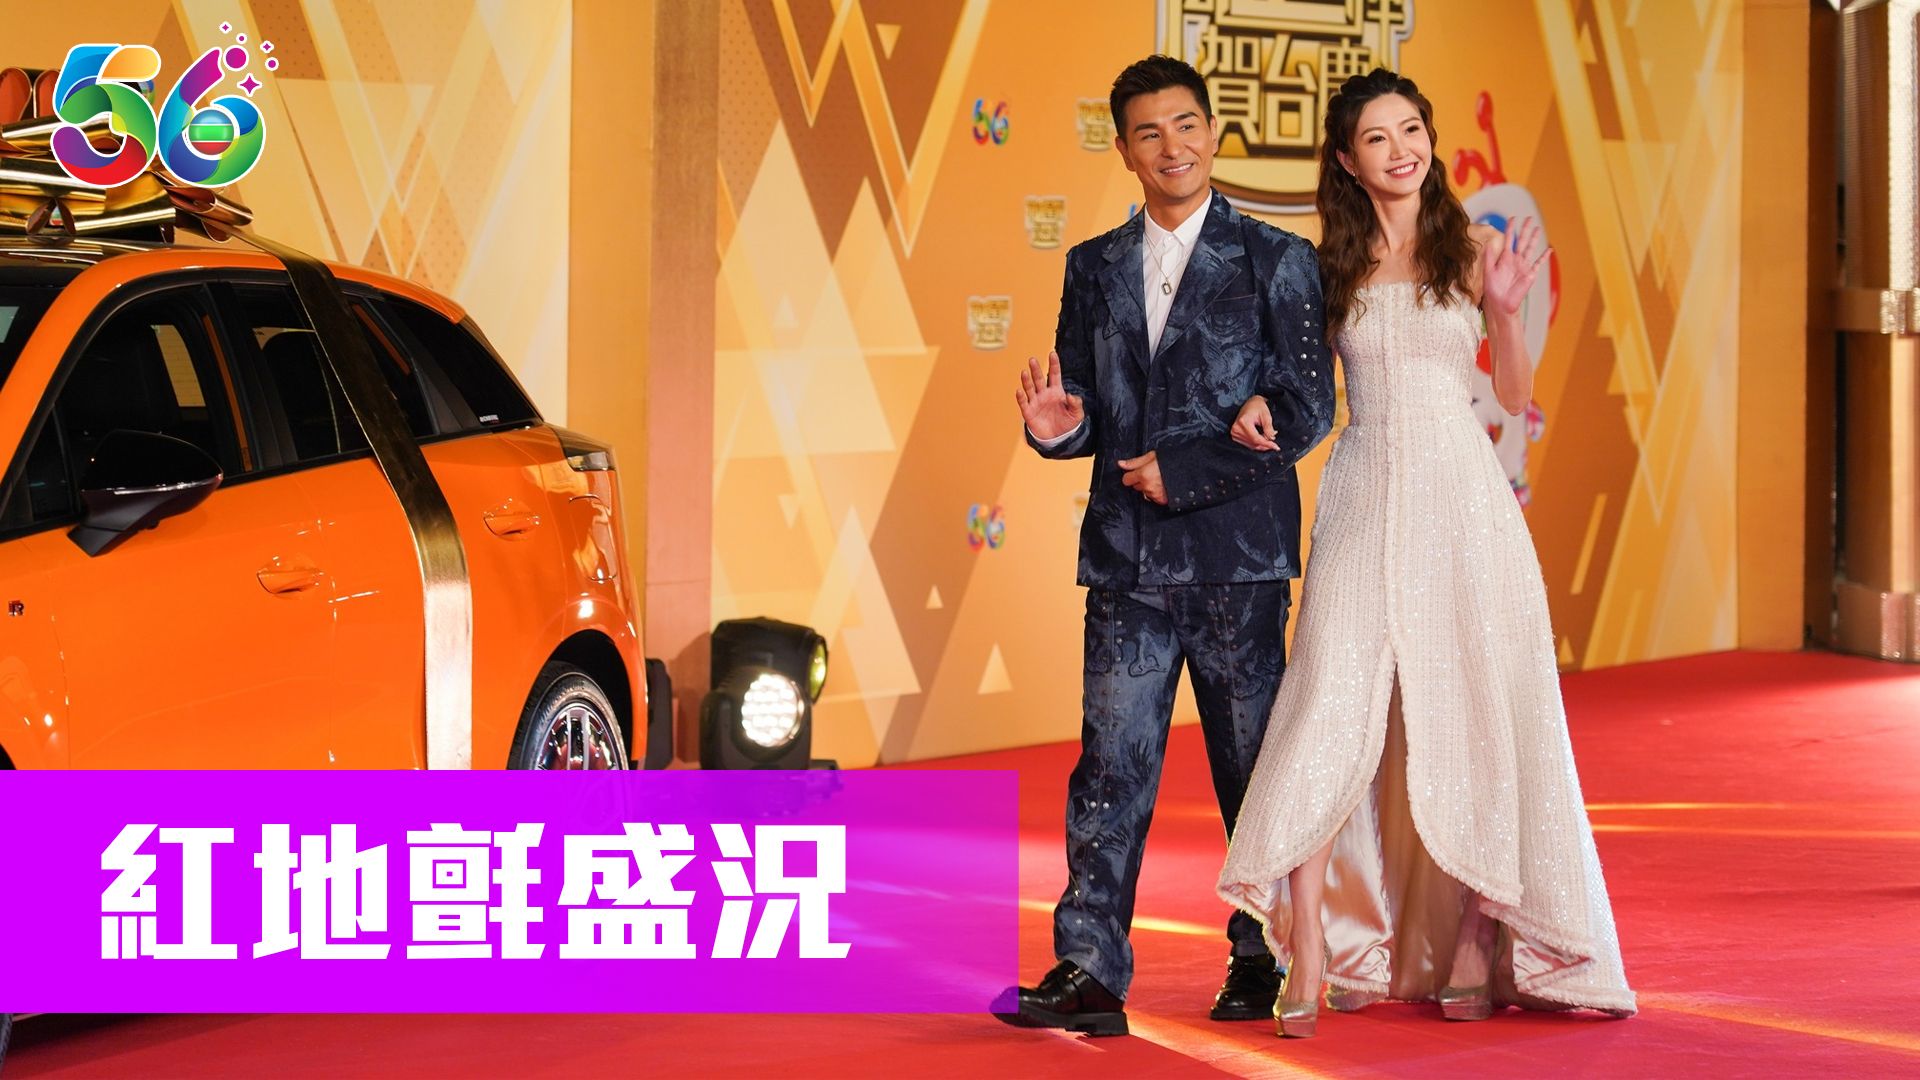 【56台慶精華】紅地氈盛況-TVB 56th Anniversary Gala – Red Carpet